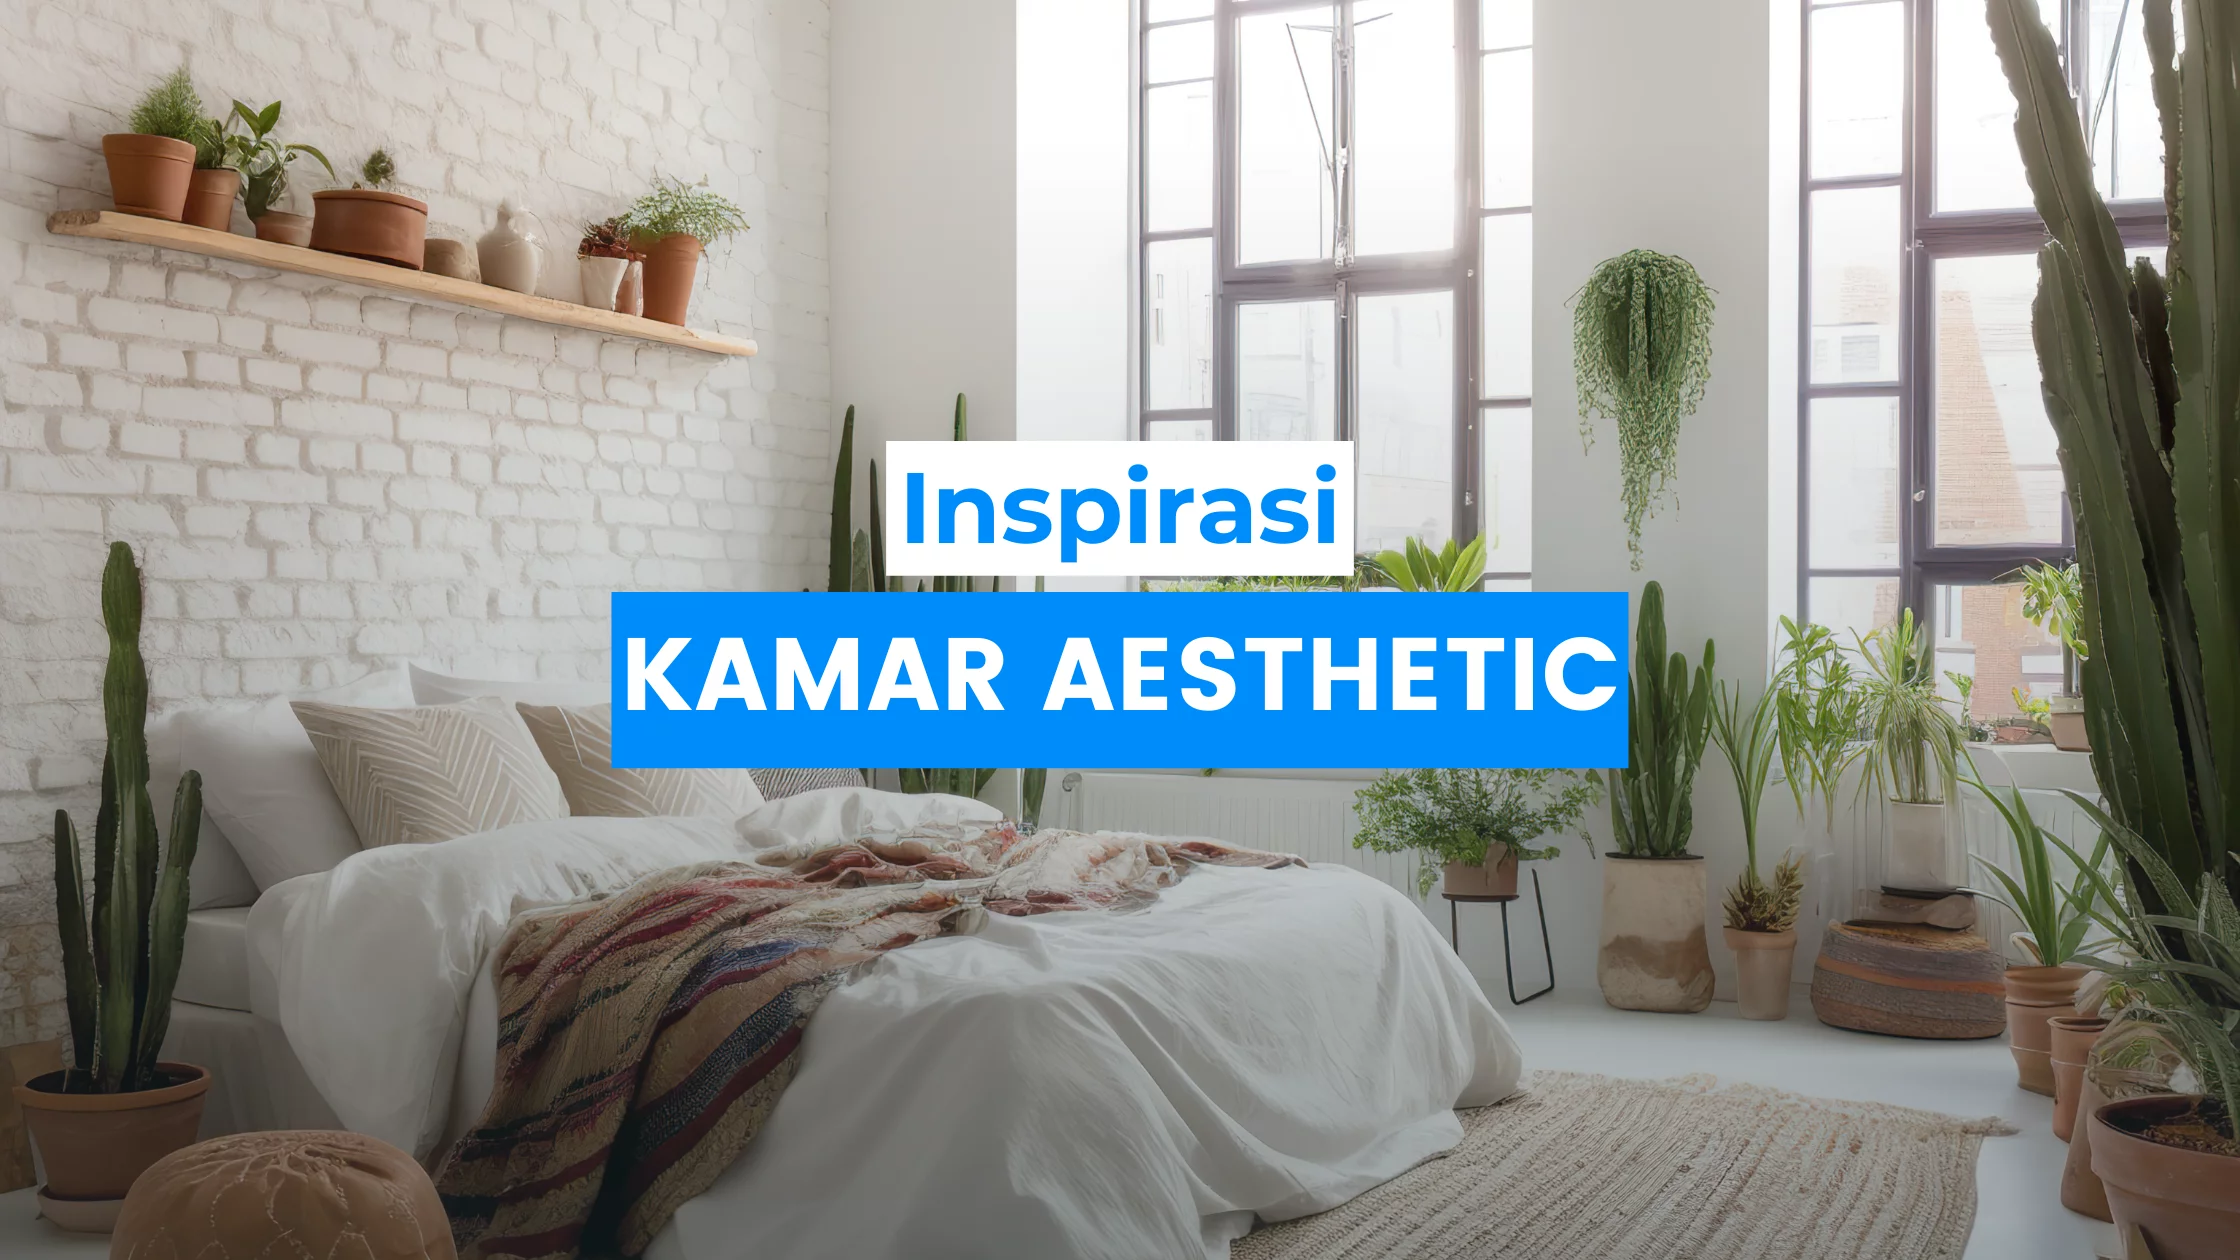 Inspirasi Kamar Aesthetic